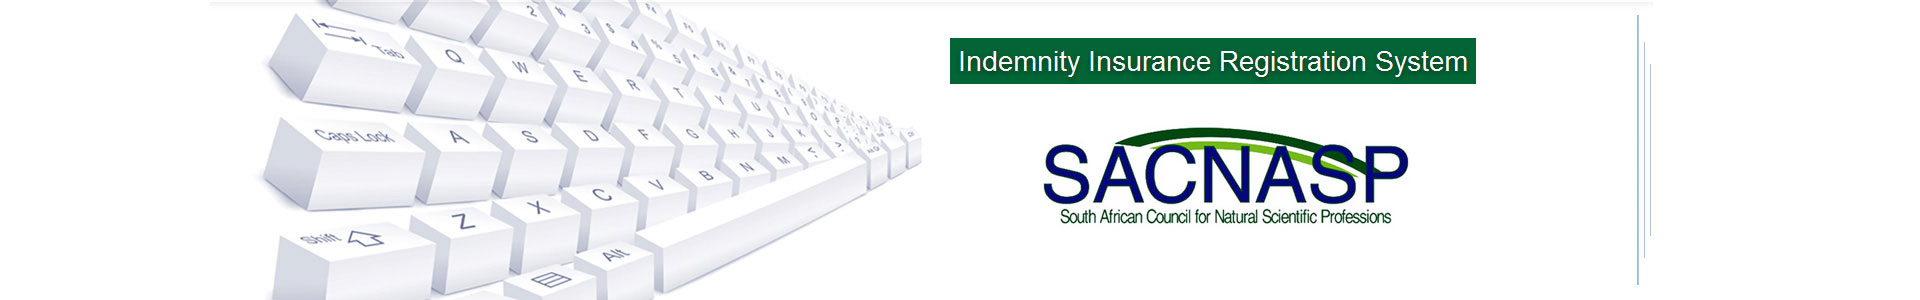 SACNASP Indemnity Insurance